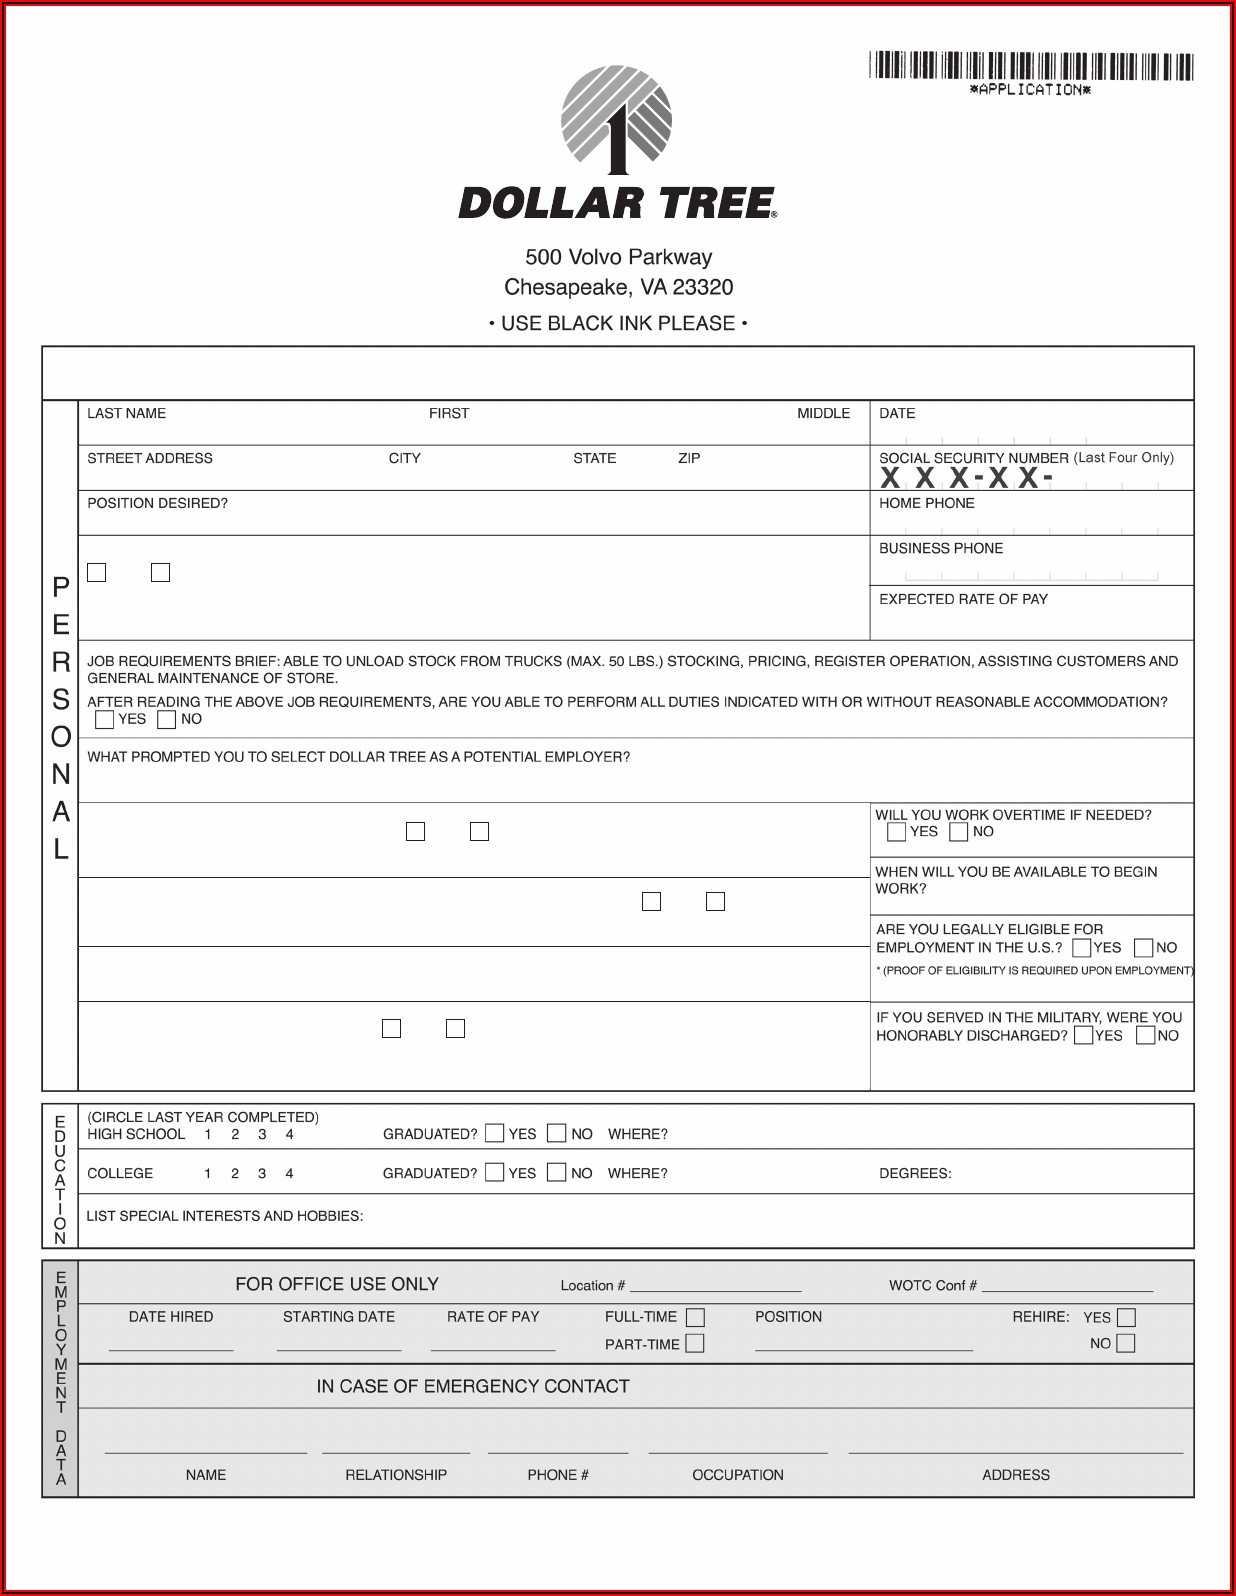 Dollar Tree Job Application Form Online Pdf